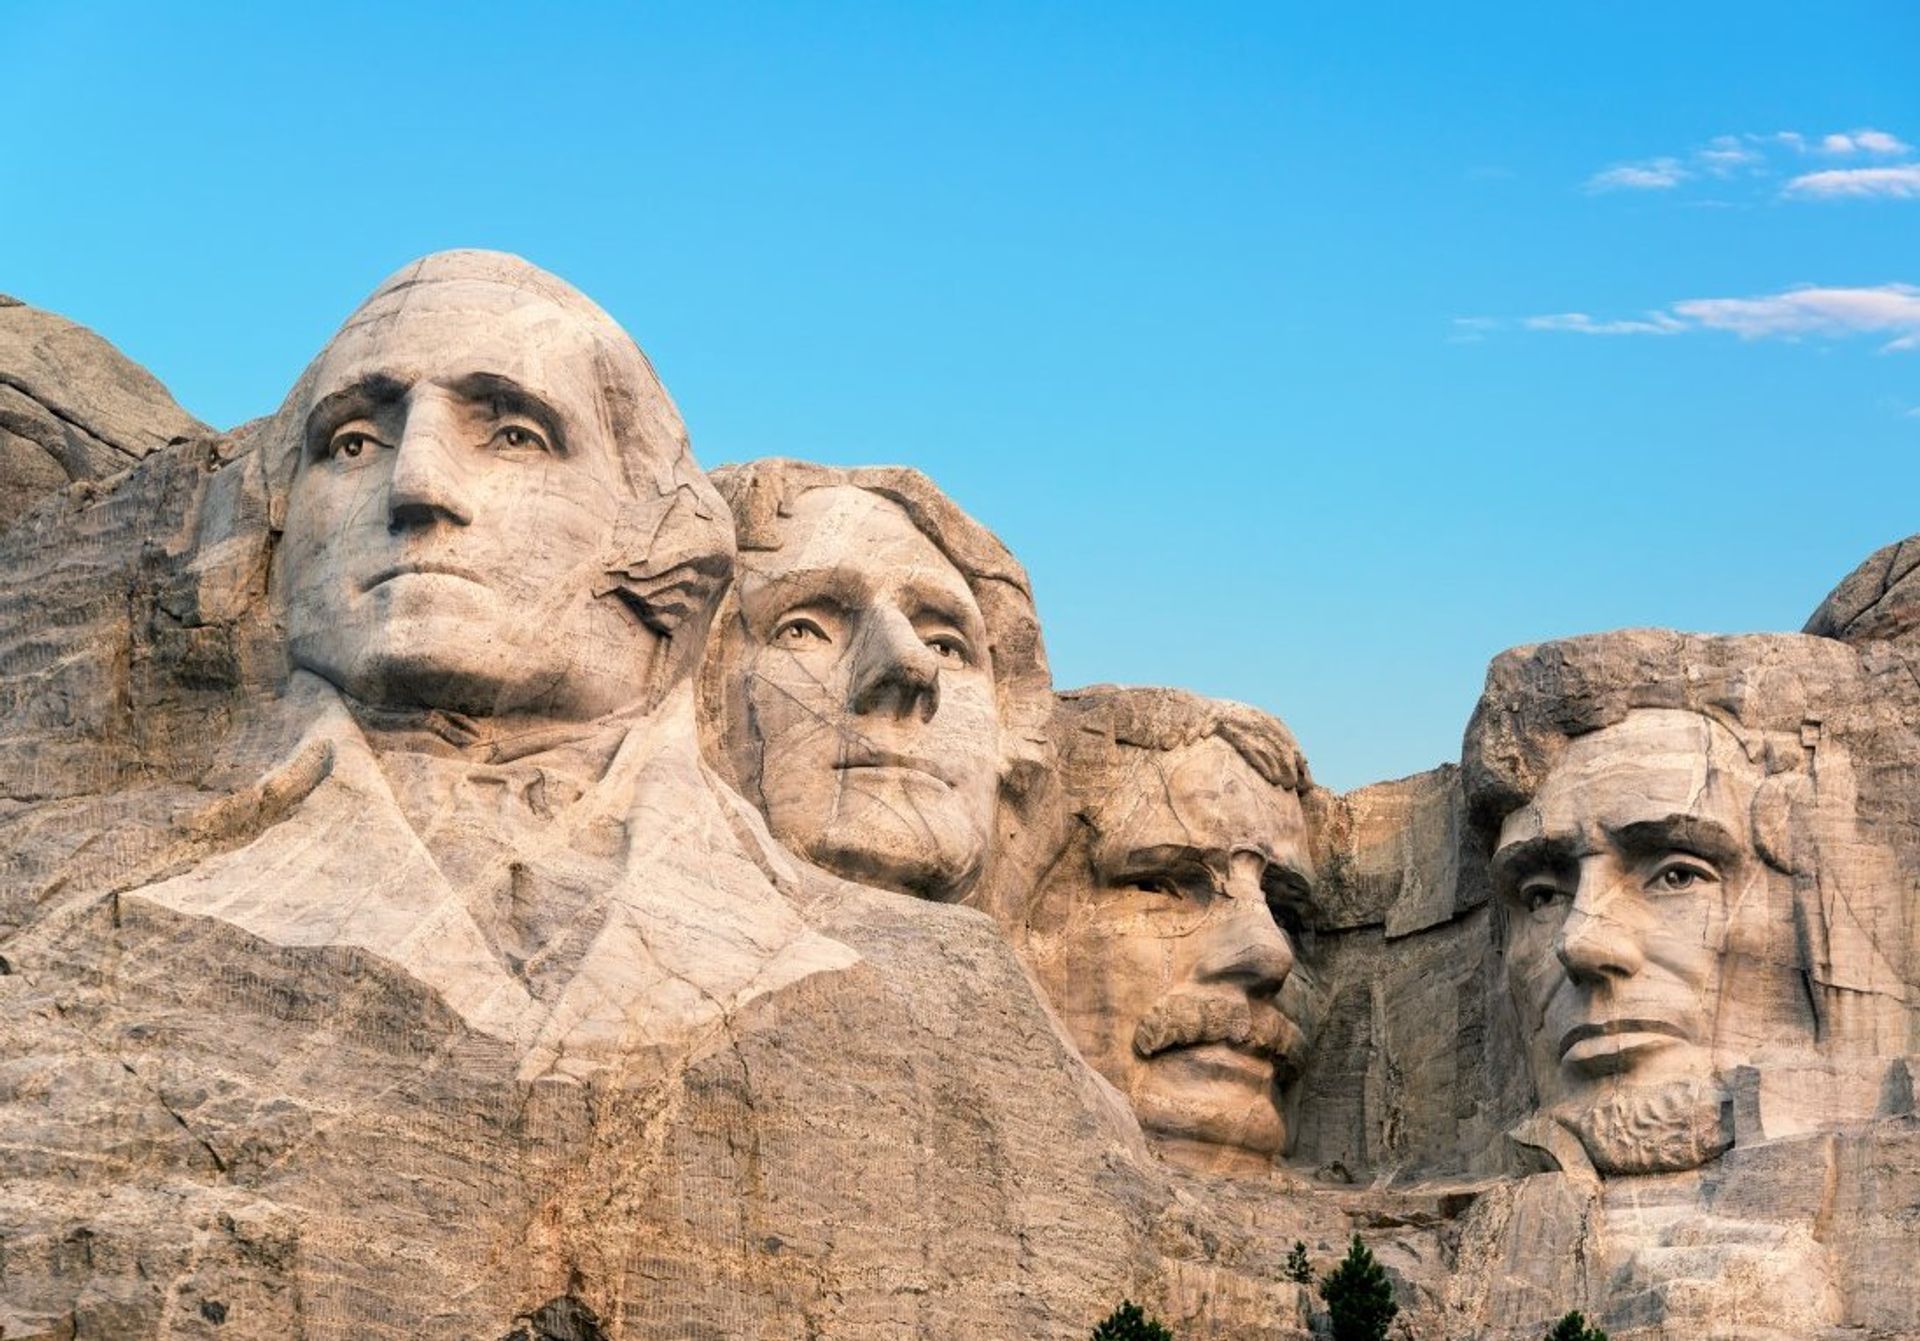 Mount Rushmore National Memorial, South Dakota, paying homage to Washington, Jefferson, Roosevelt and Lincoln